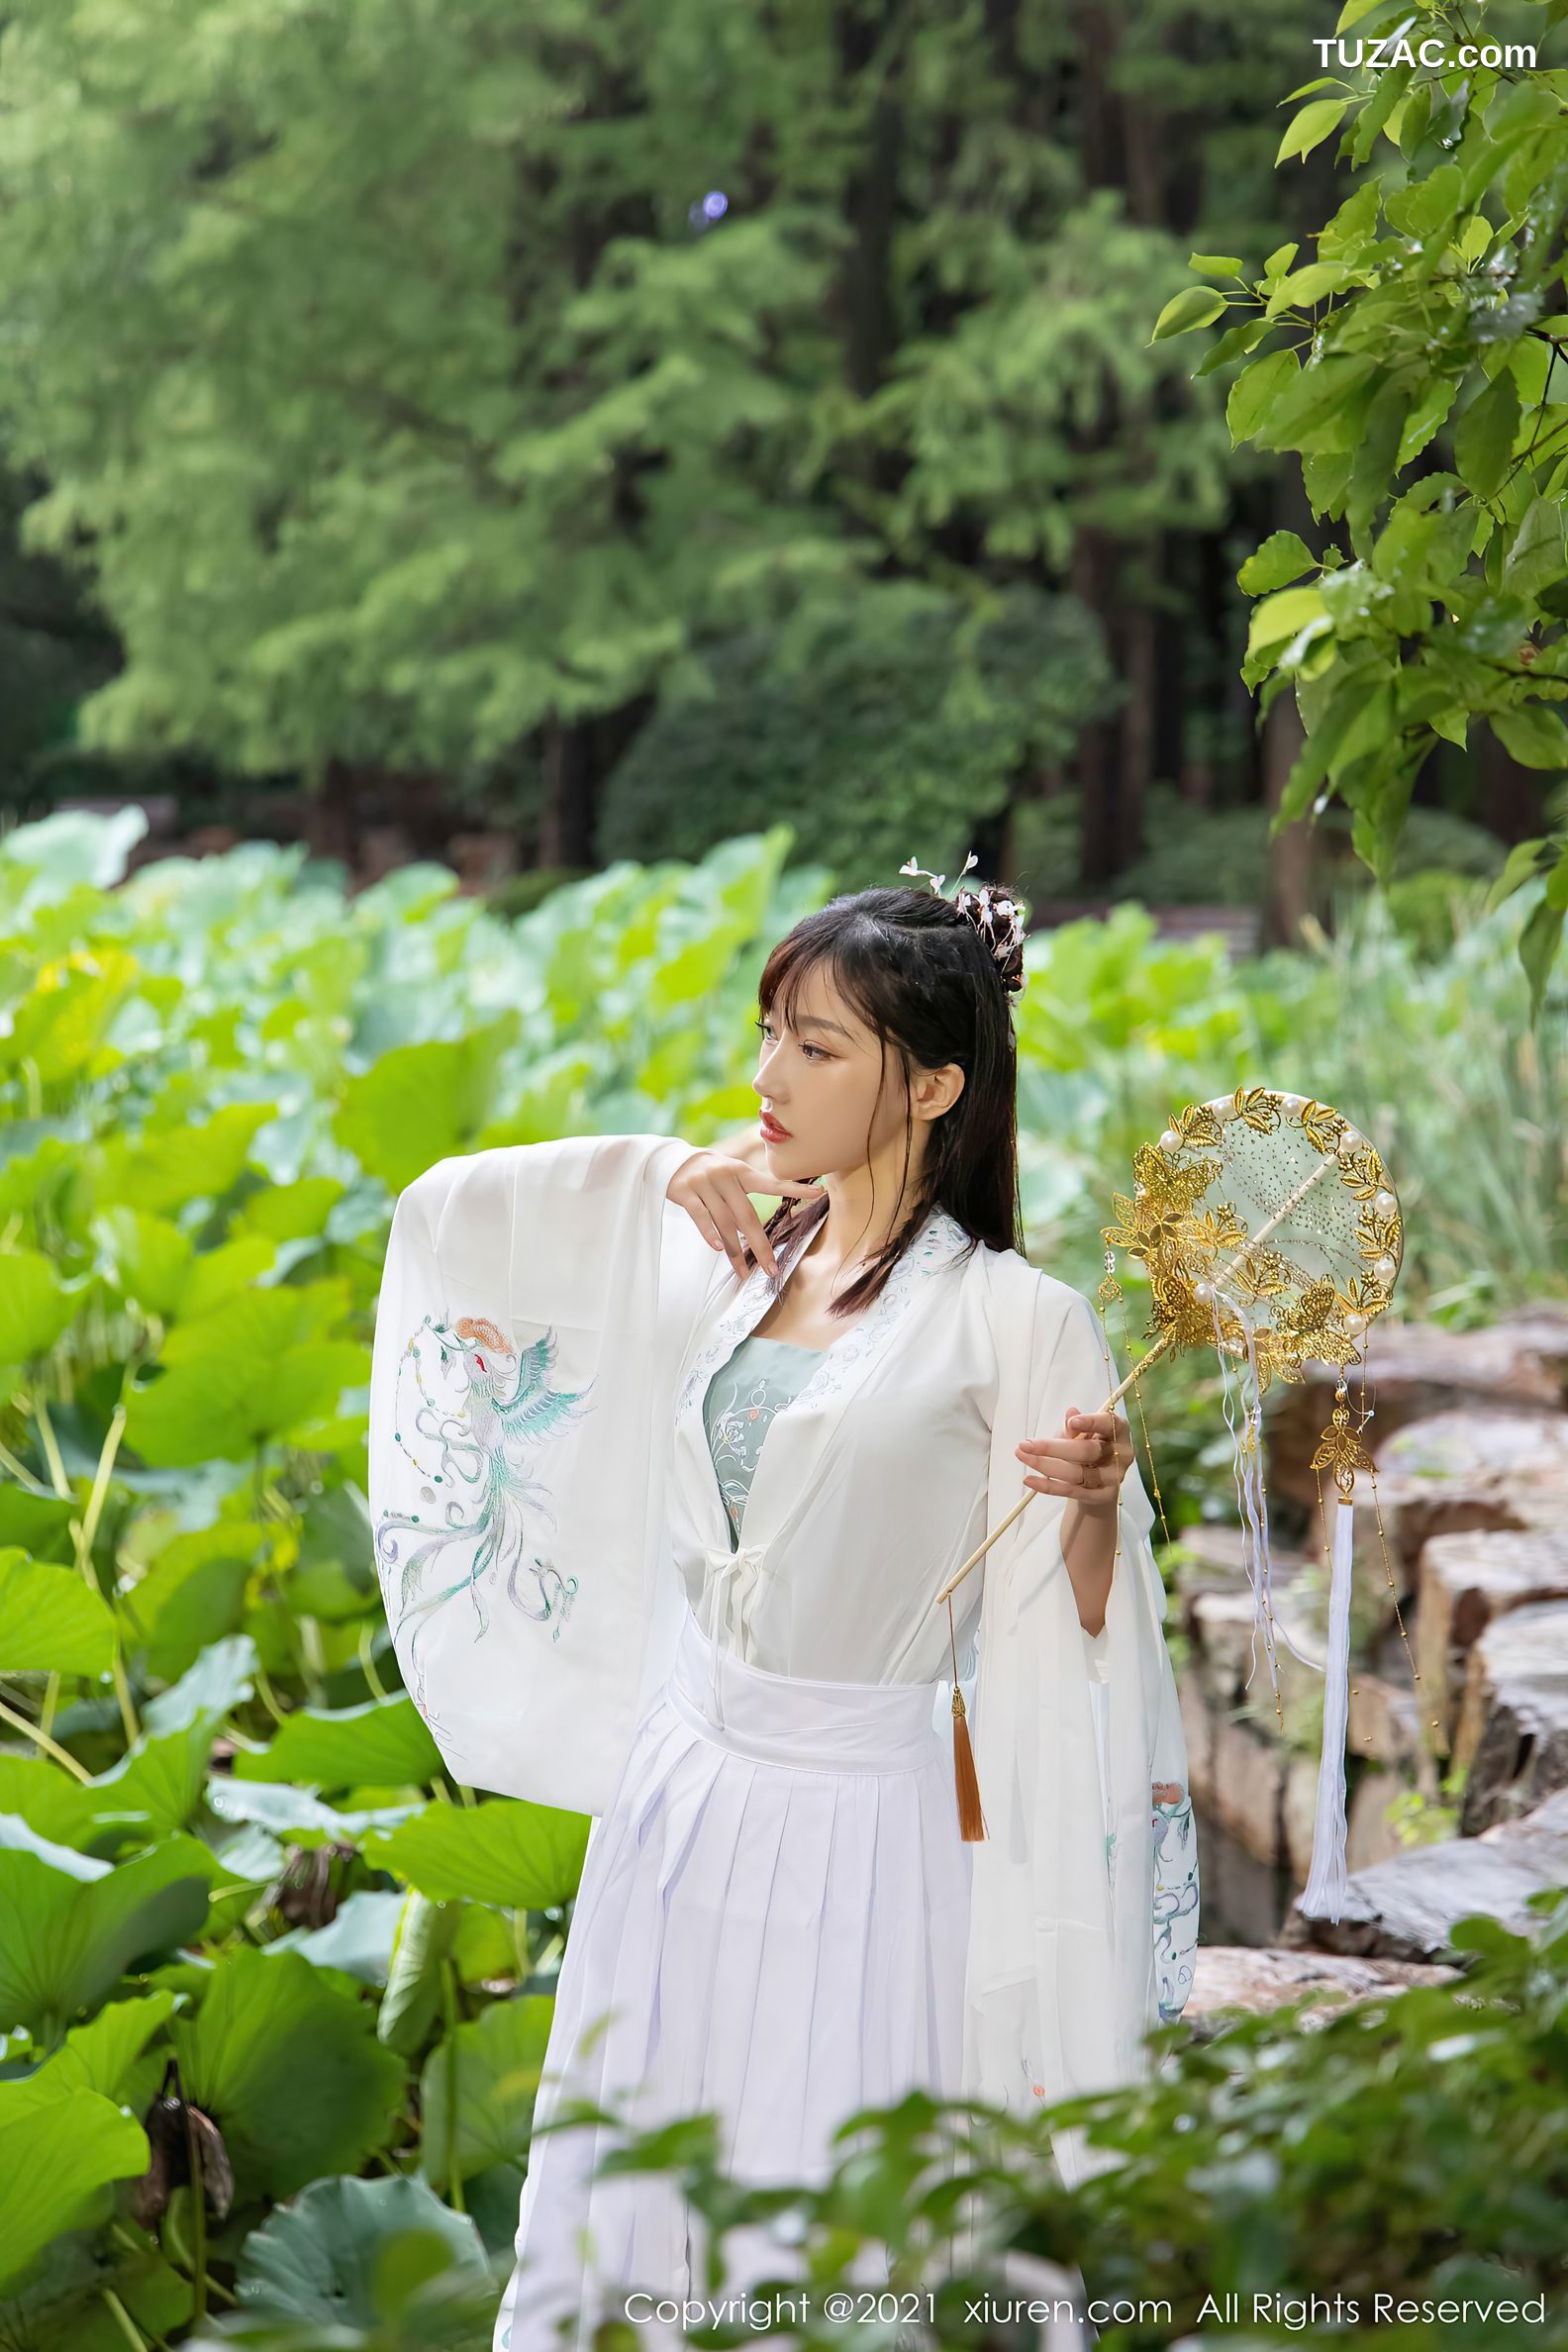 XiuRen秀人网-4344-西门小玉-古装服饰主题白色长衫-2021.12.16